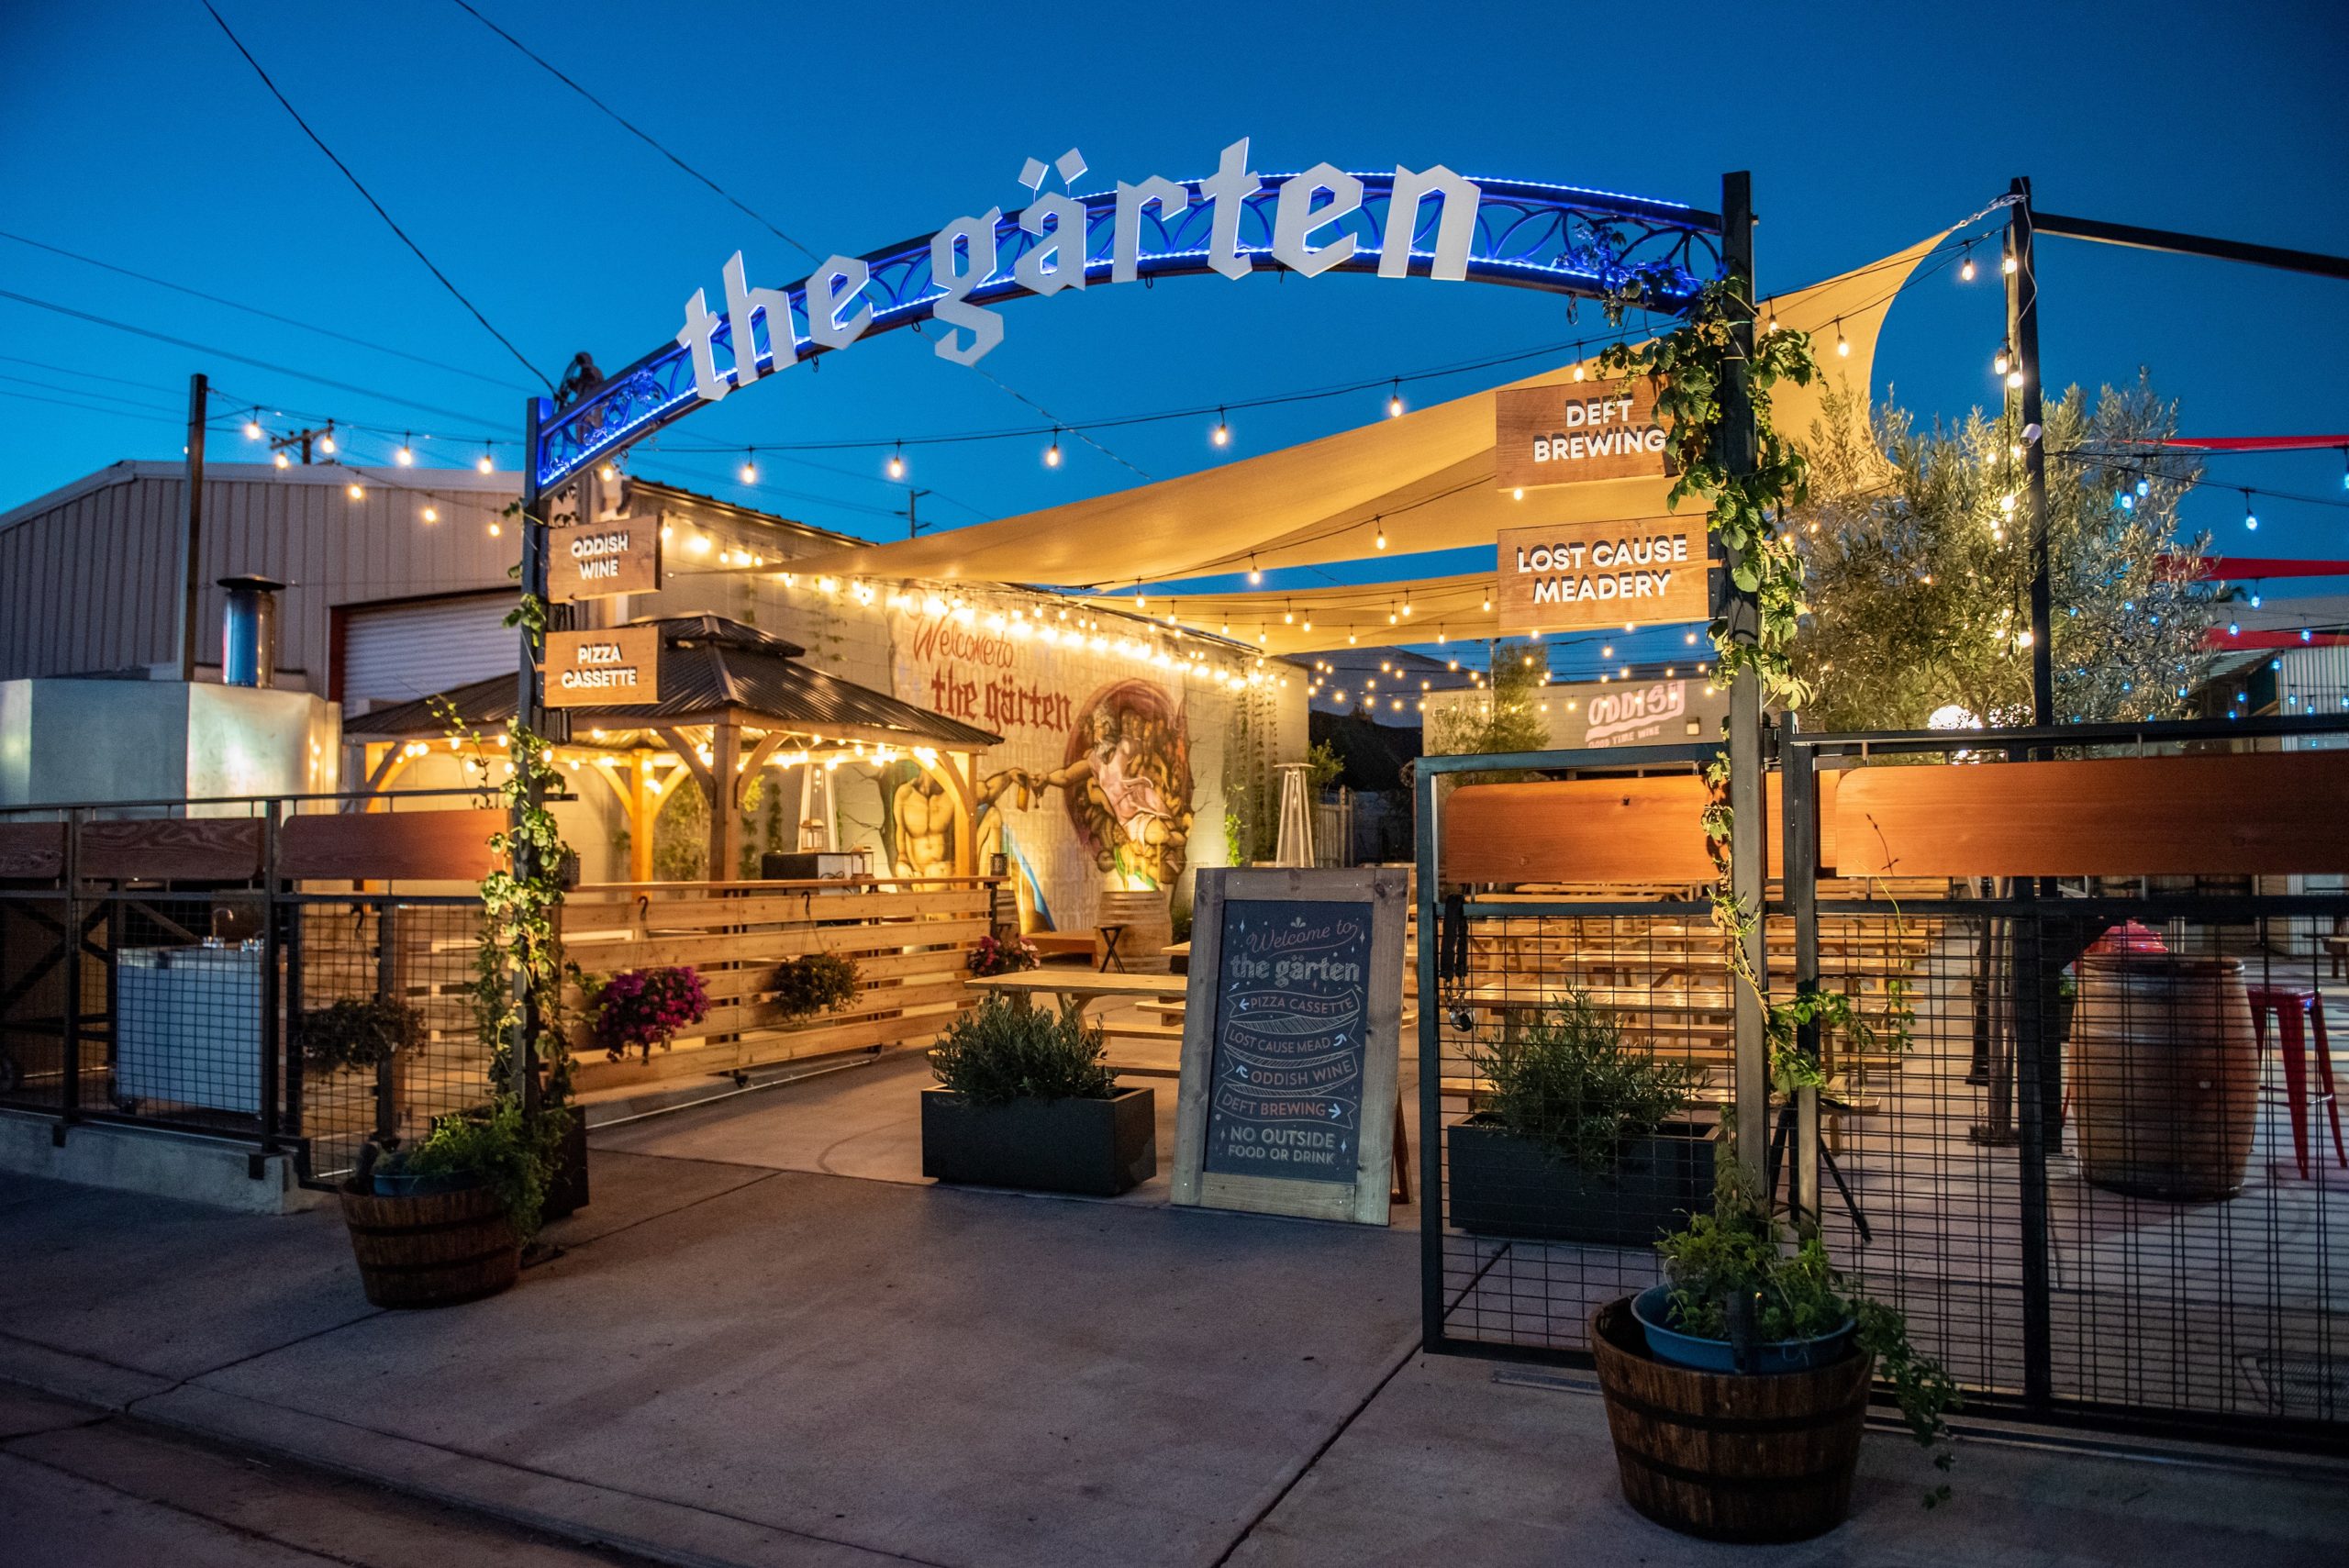 Collaborative Outdoor Venue, The Gärten, To Open In Bay Park In October